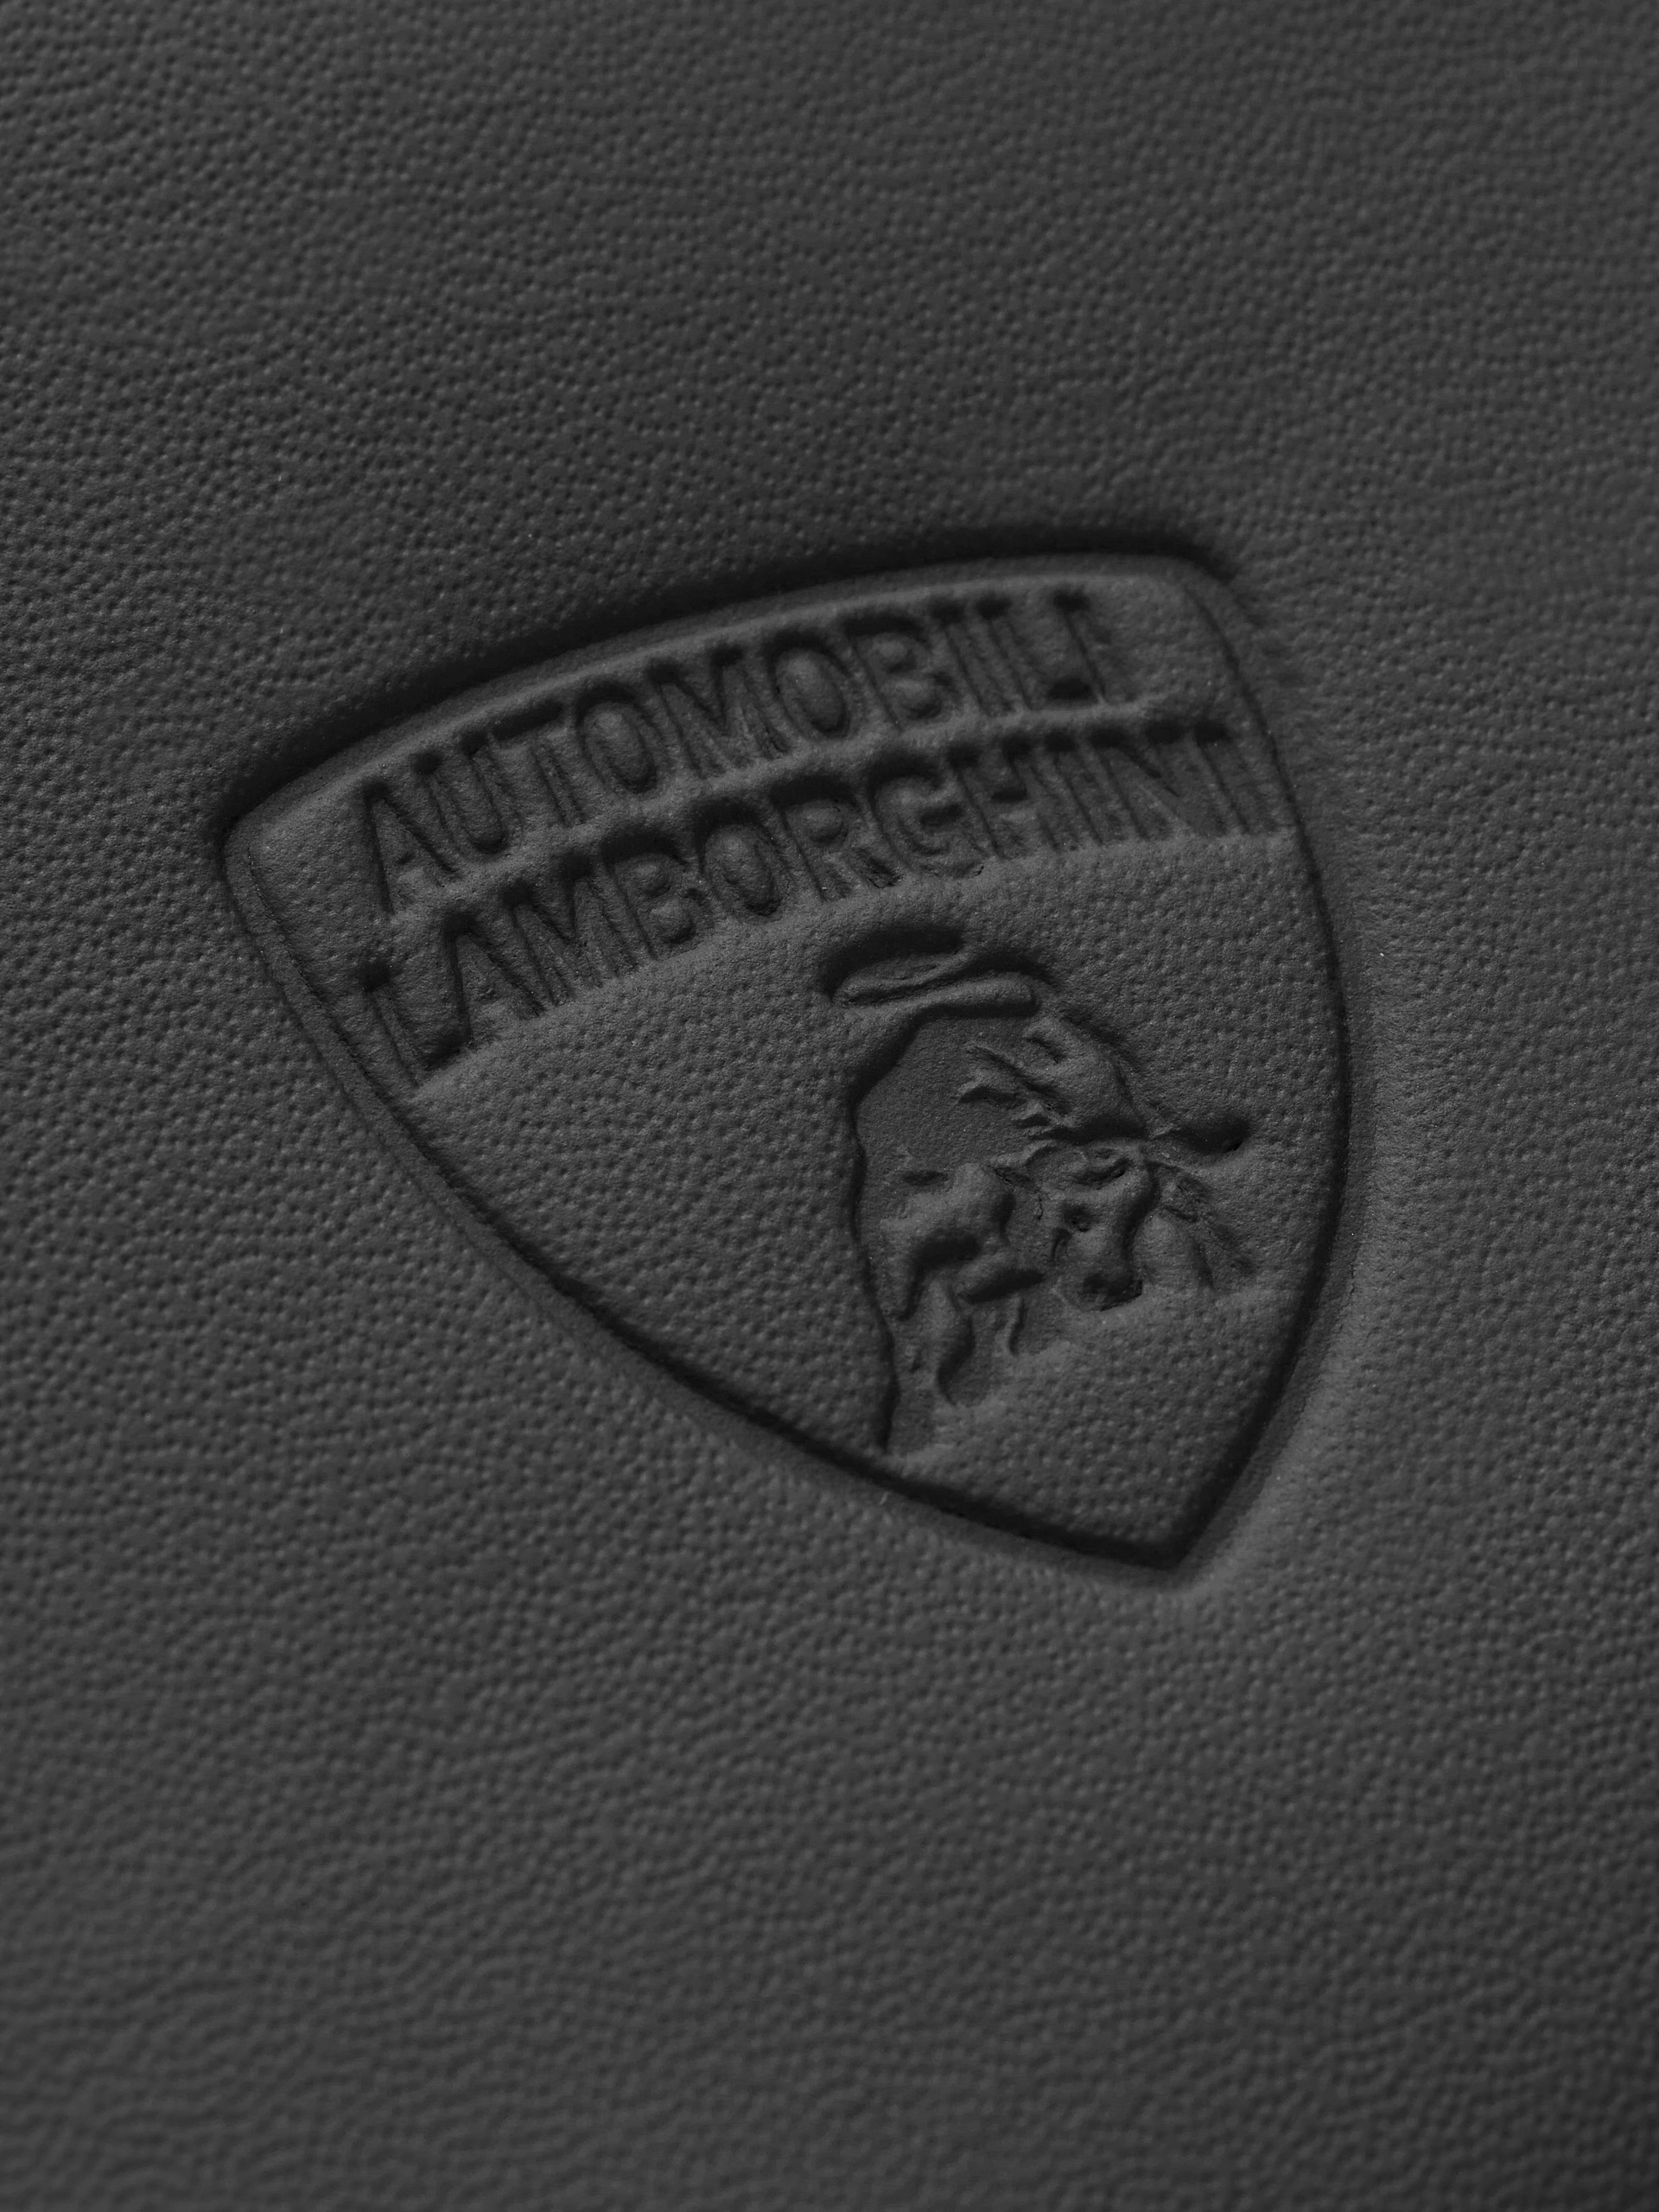 Automobili Lamborghini Upcycled Leather Compact Wallet